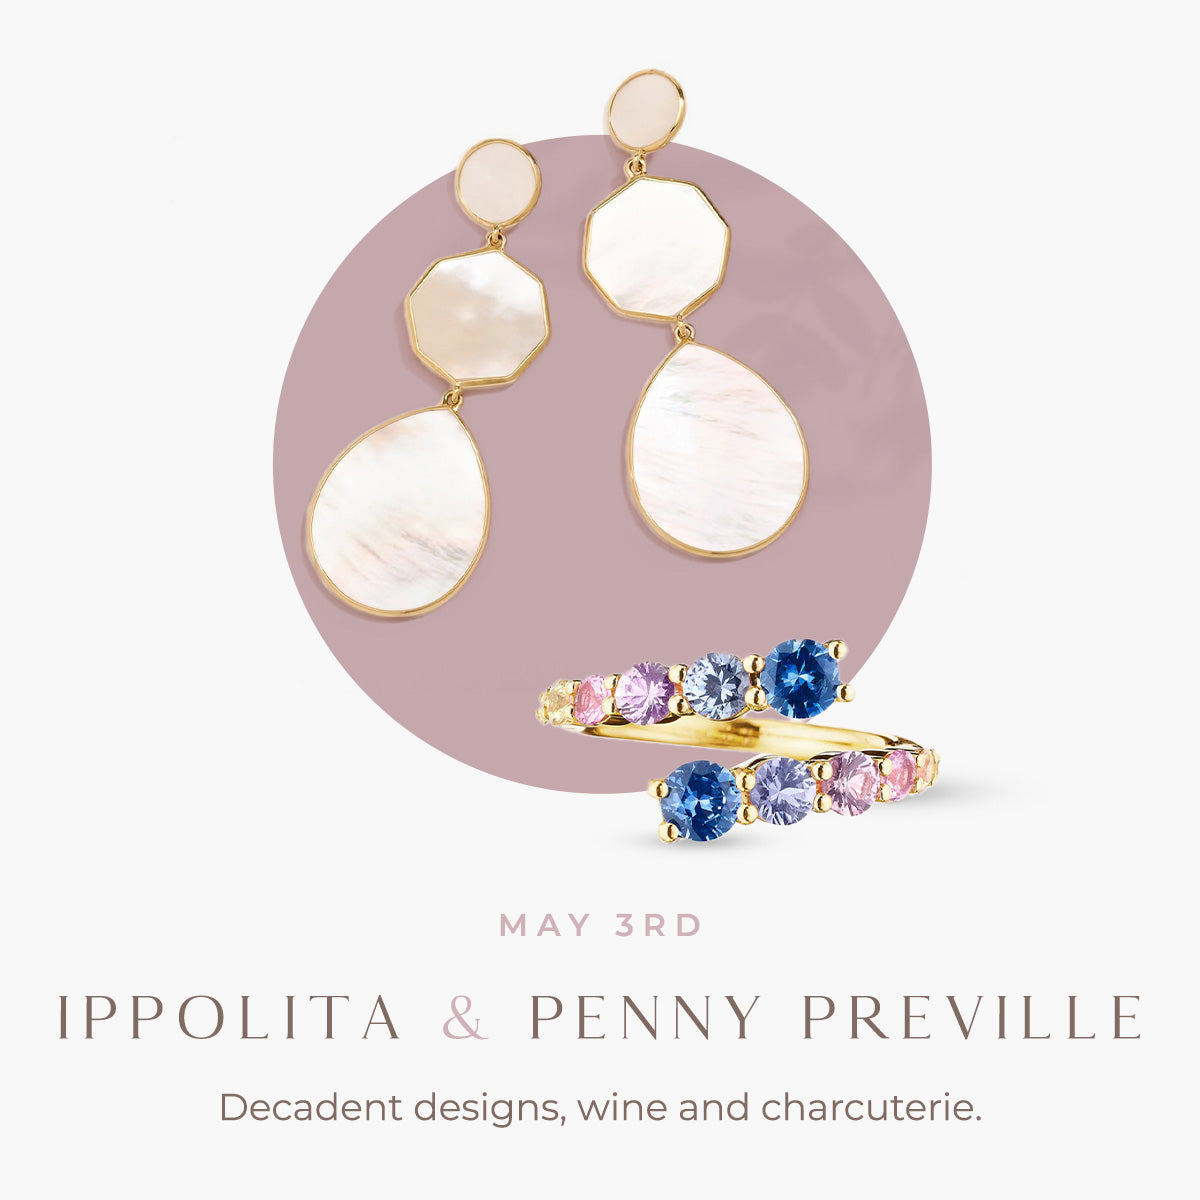 Ippolita | Penny Preville Trunk Shows